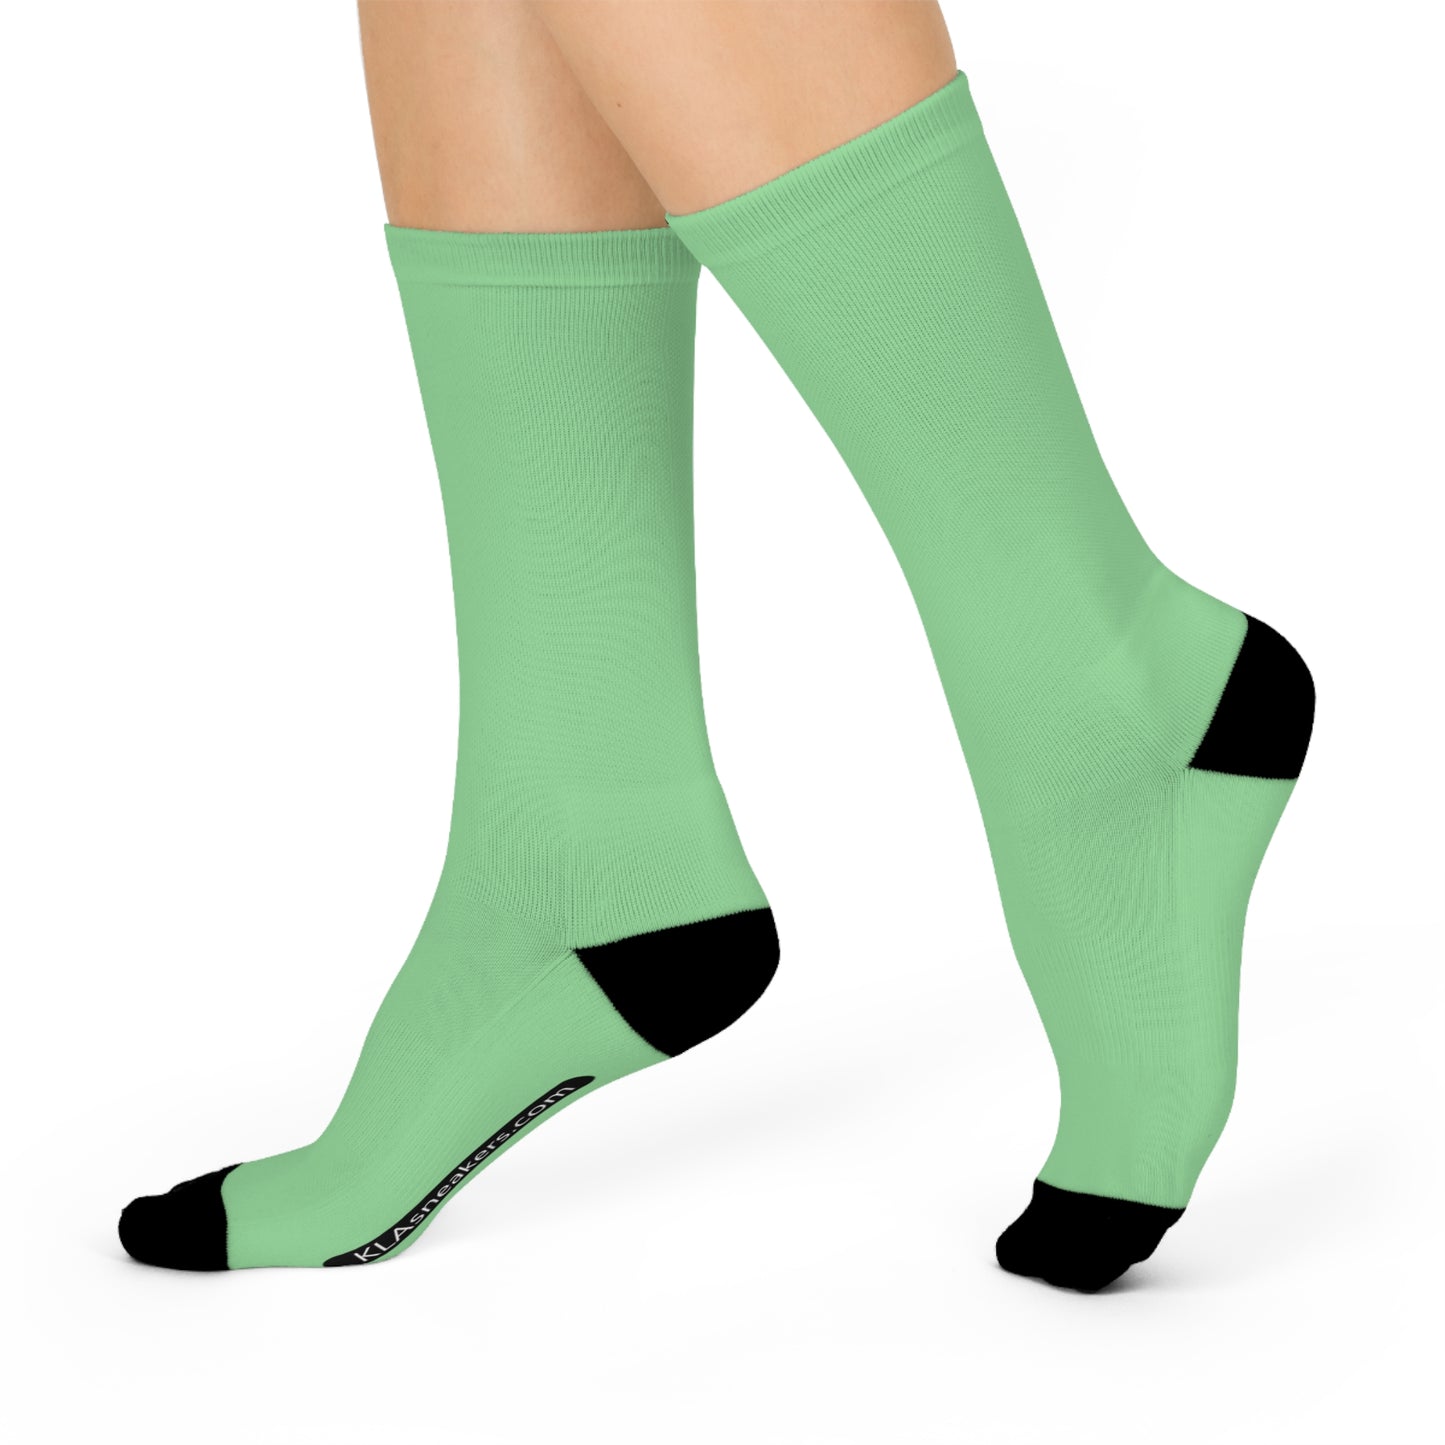 Unisex Crew Socks - Mint Green White One size 3/4 Crew